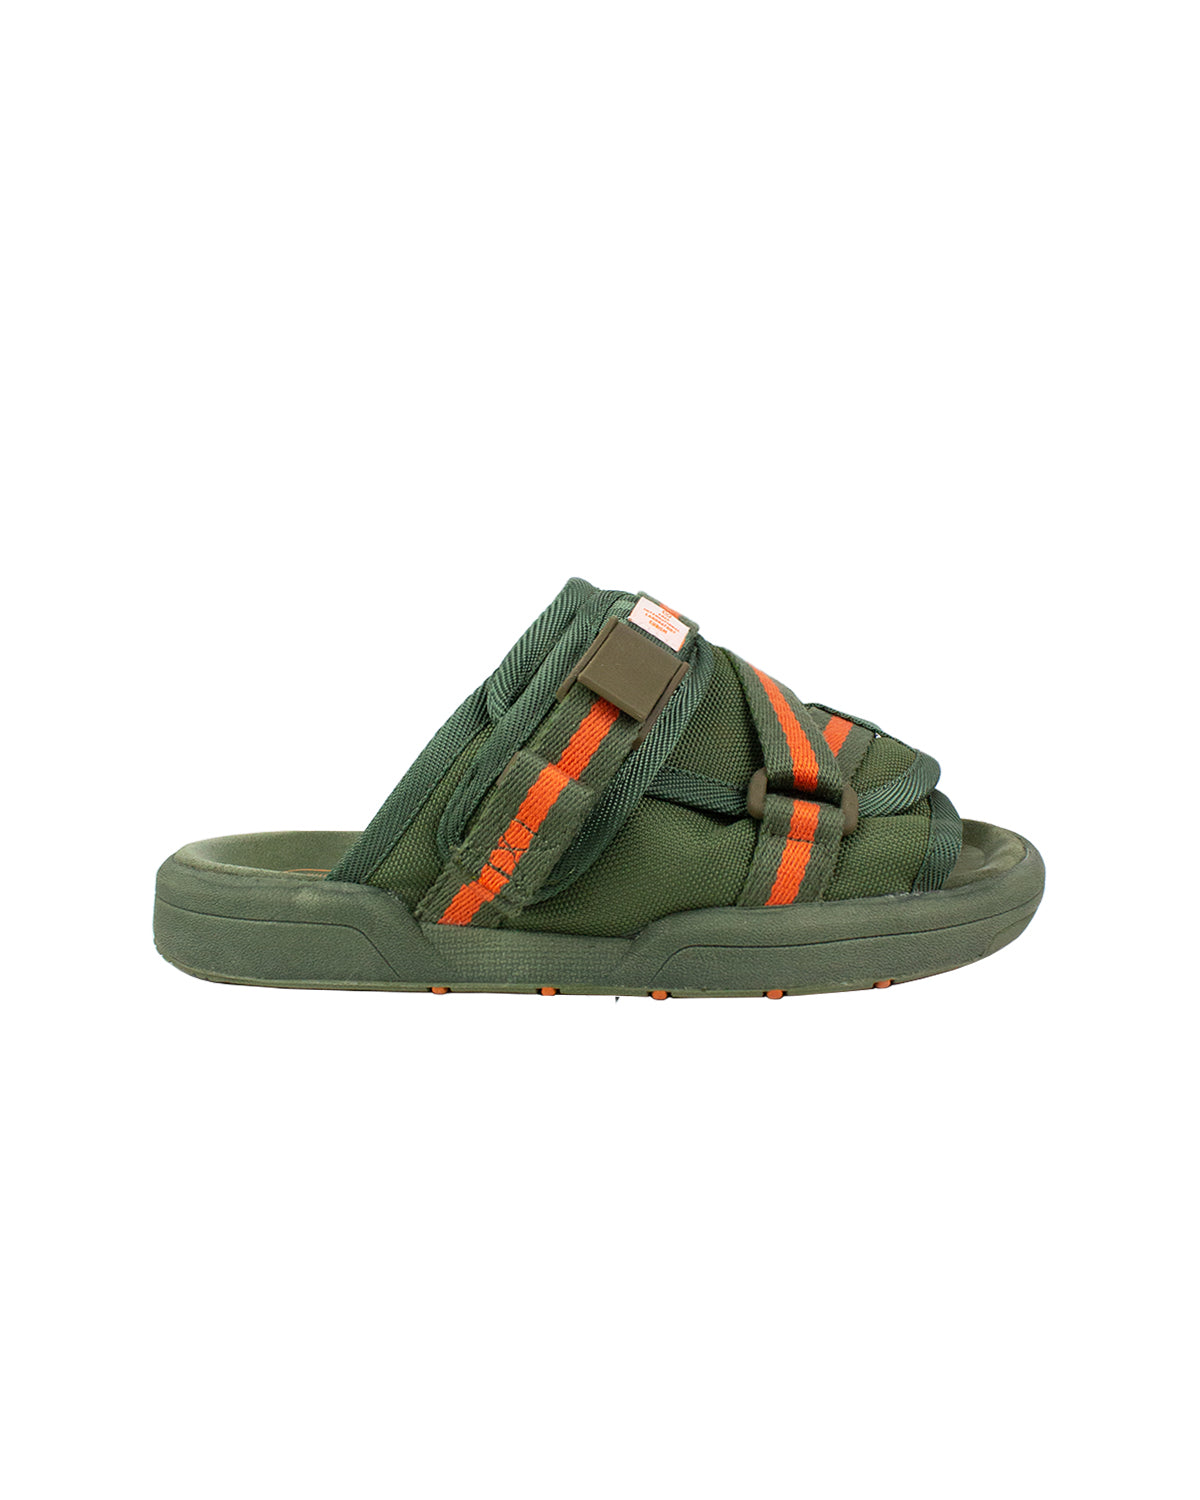 Visvim Christo Striped Sandals Olive Green and Orange Size XS 